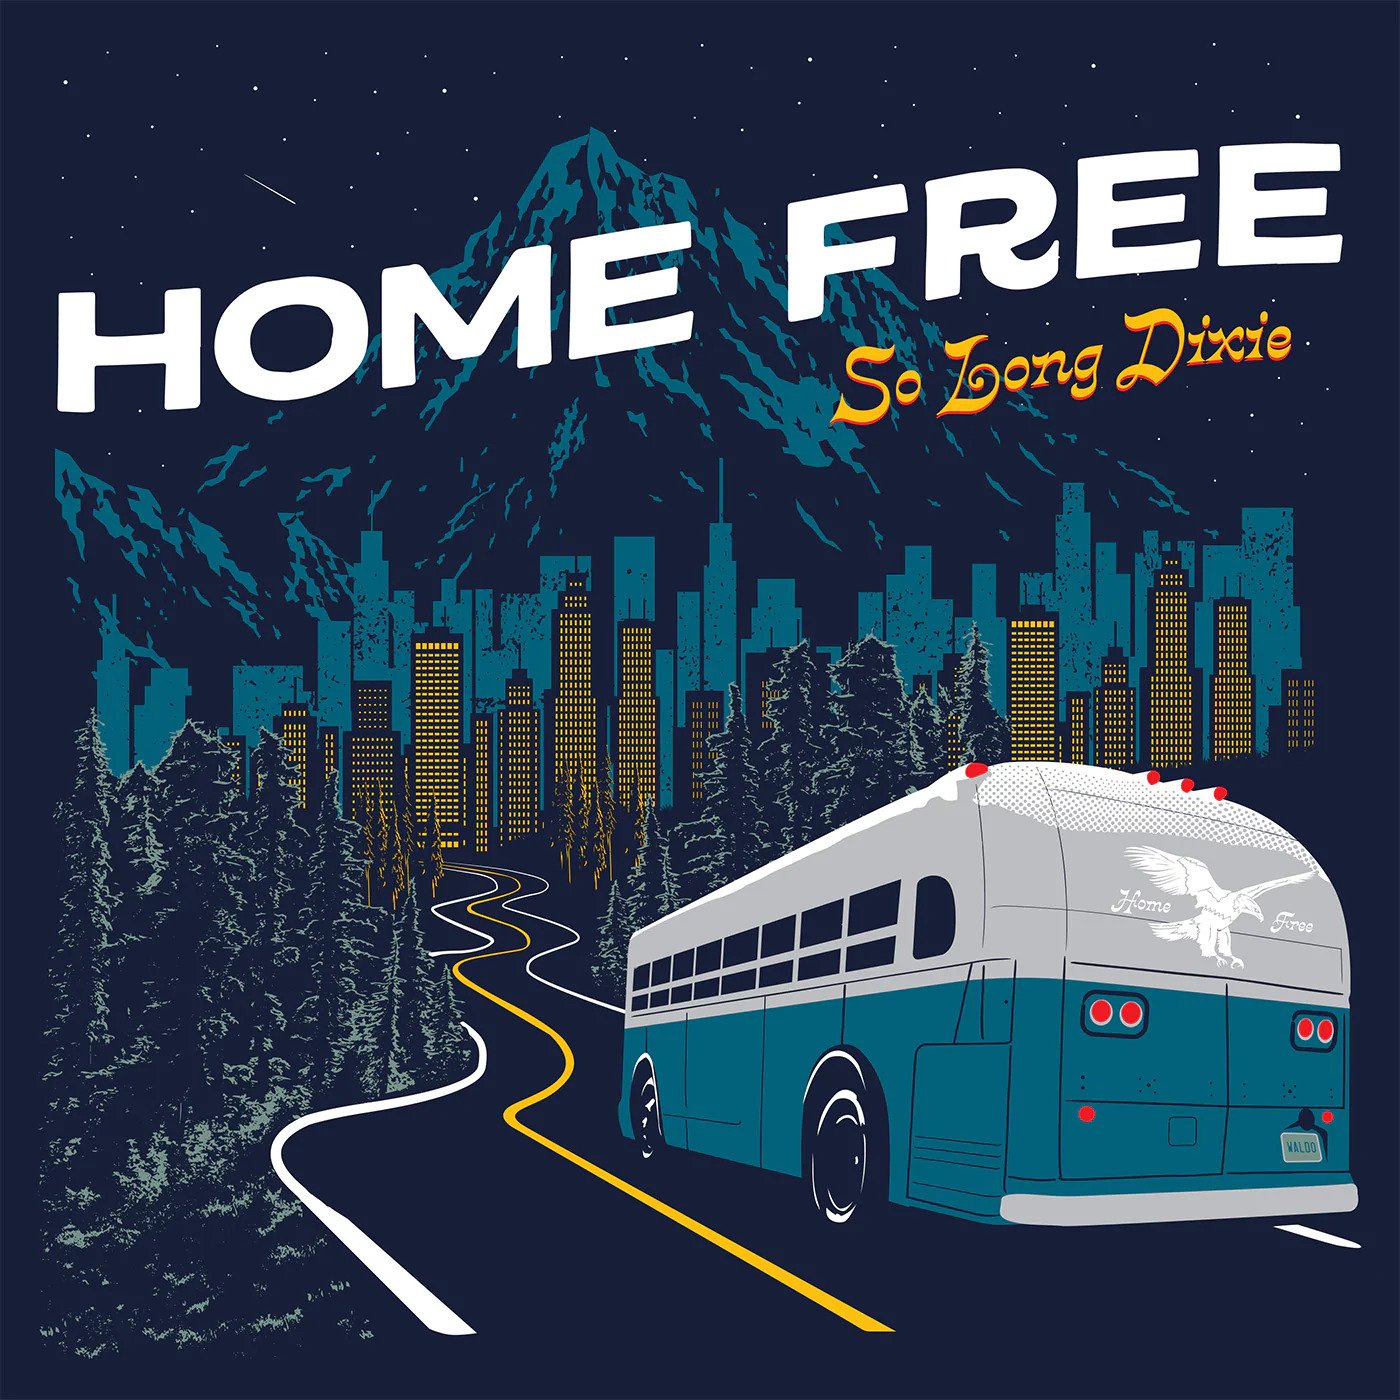 So Long Dixie – Home Free